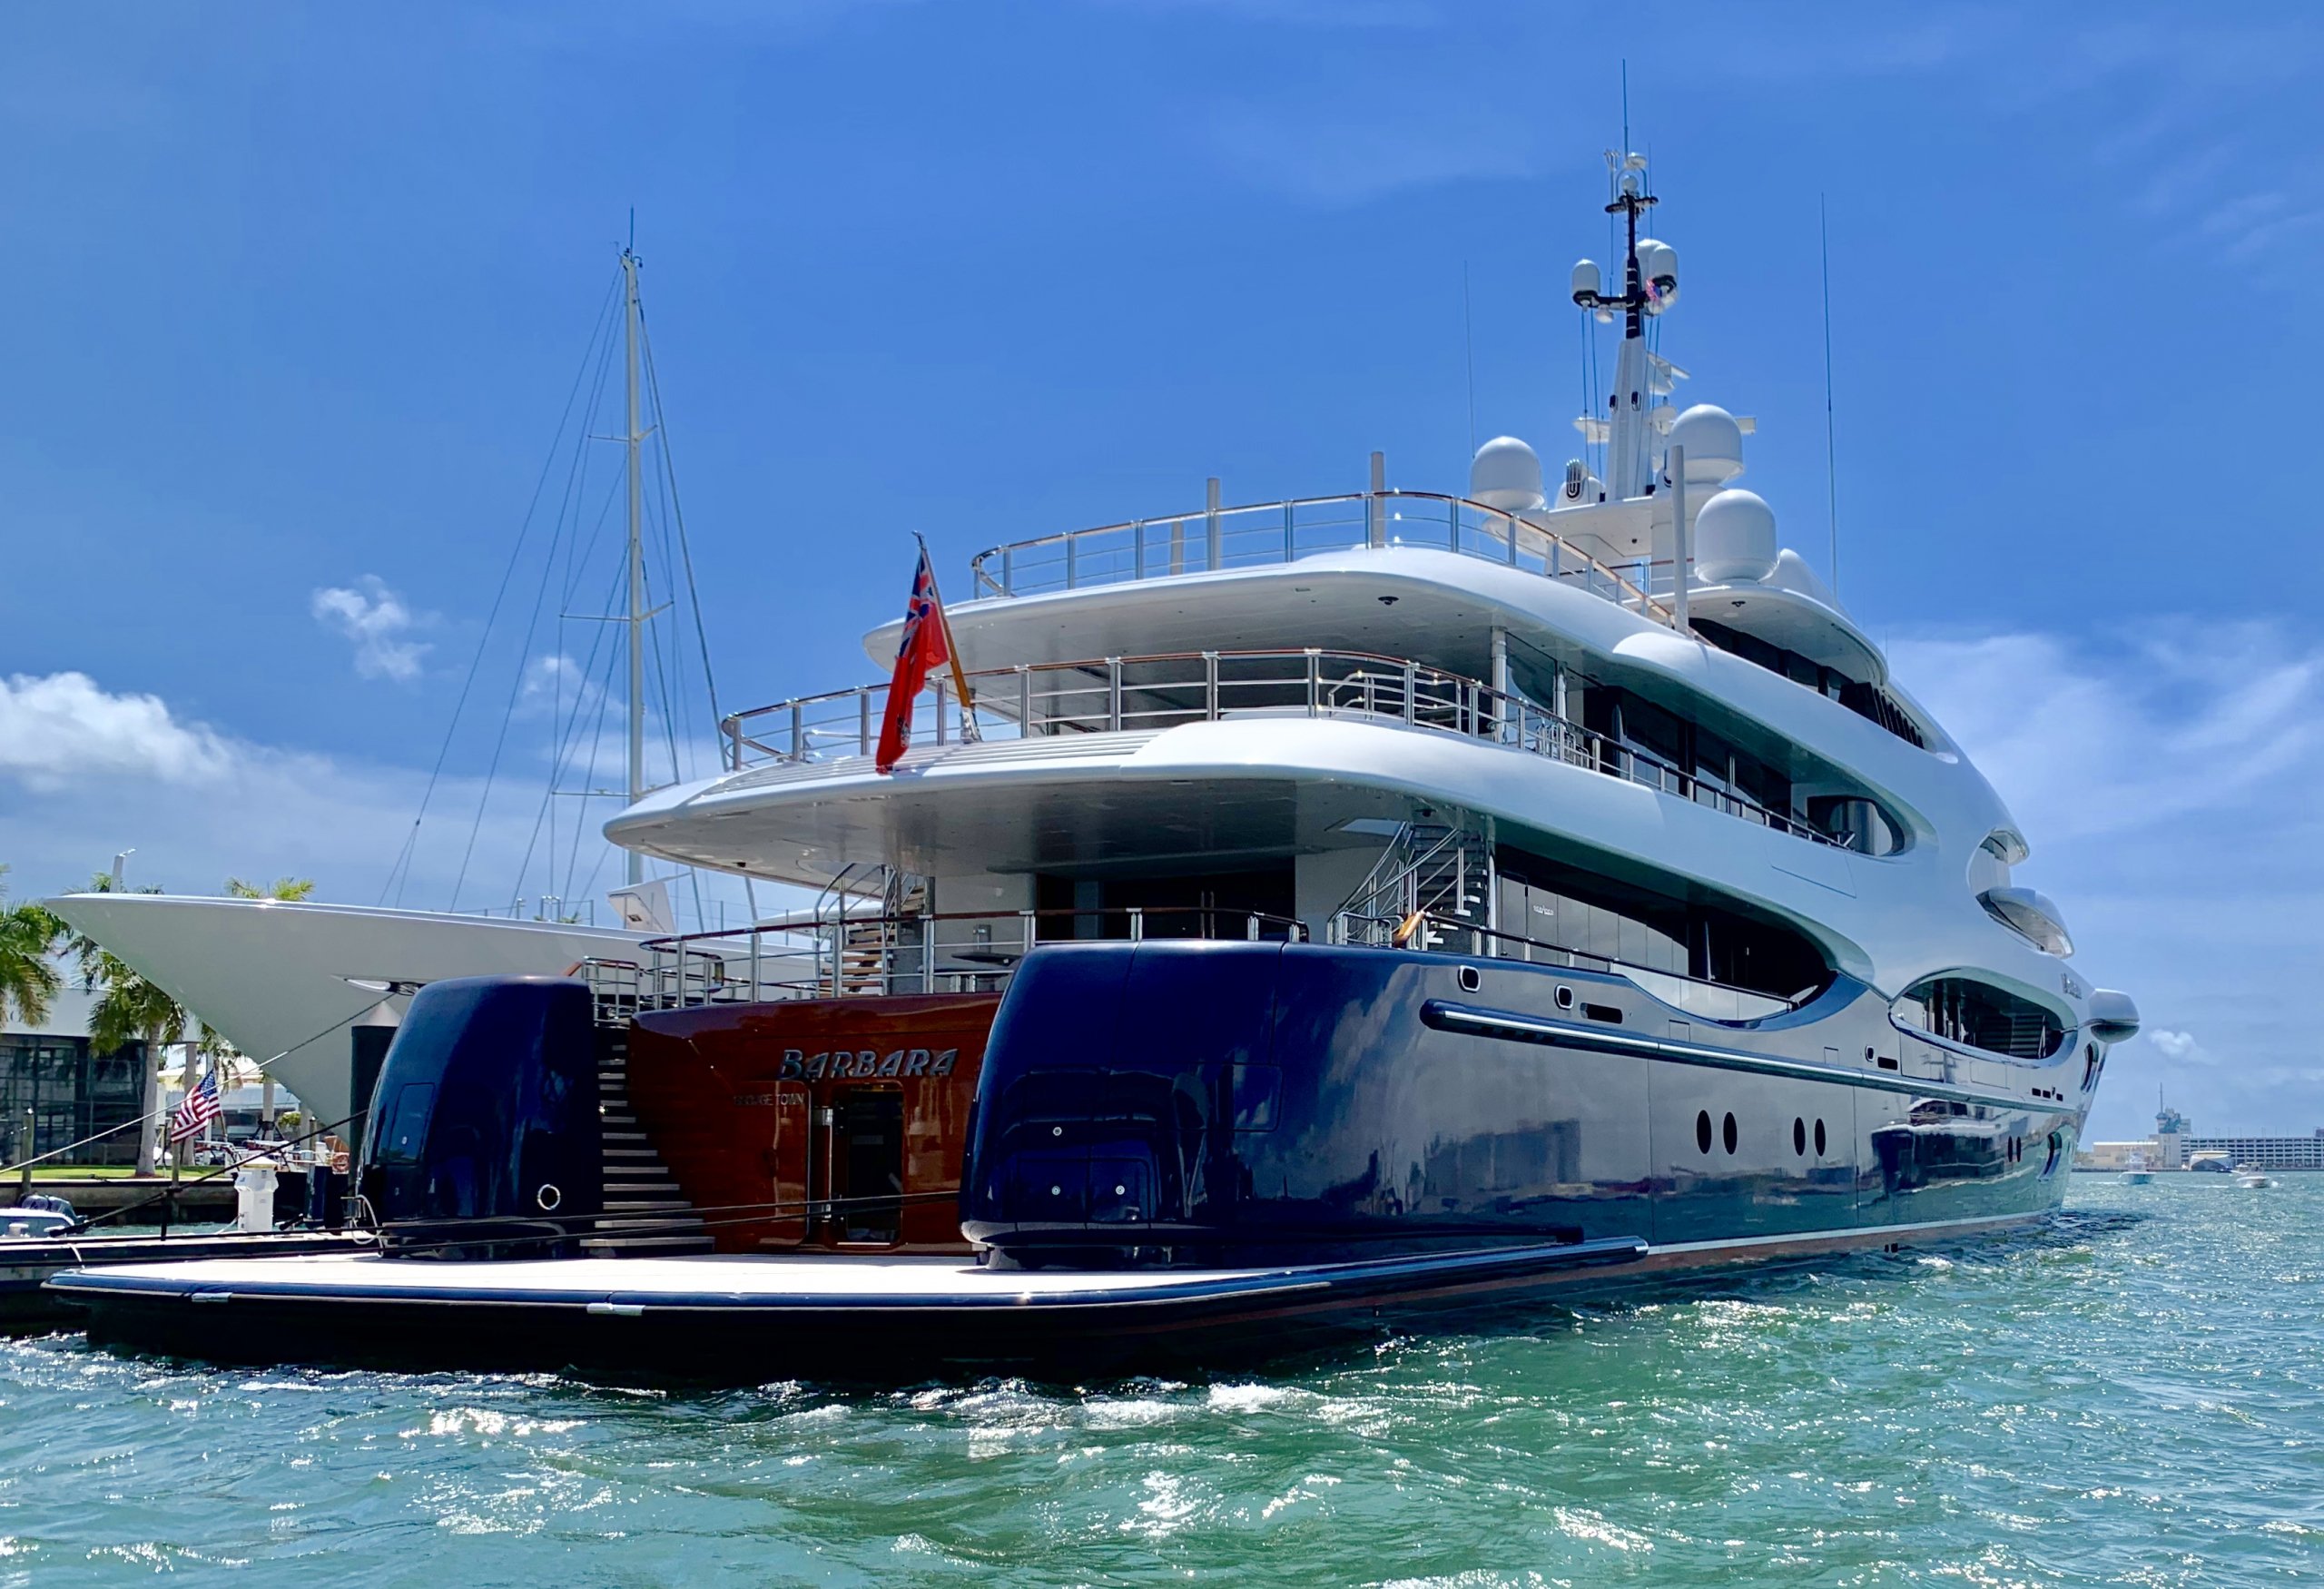 The Oceanco yacht Barbara in Fort Lauderdale